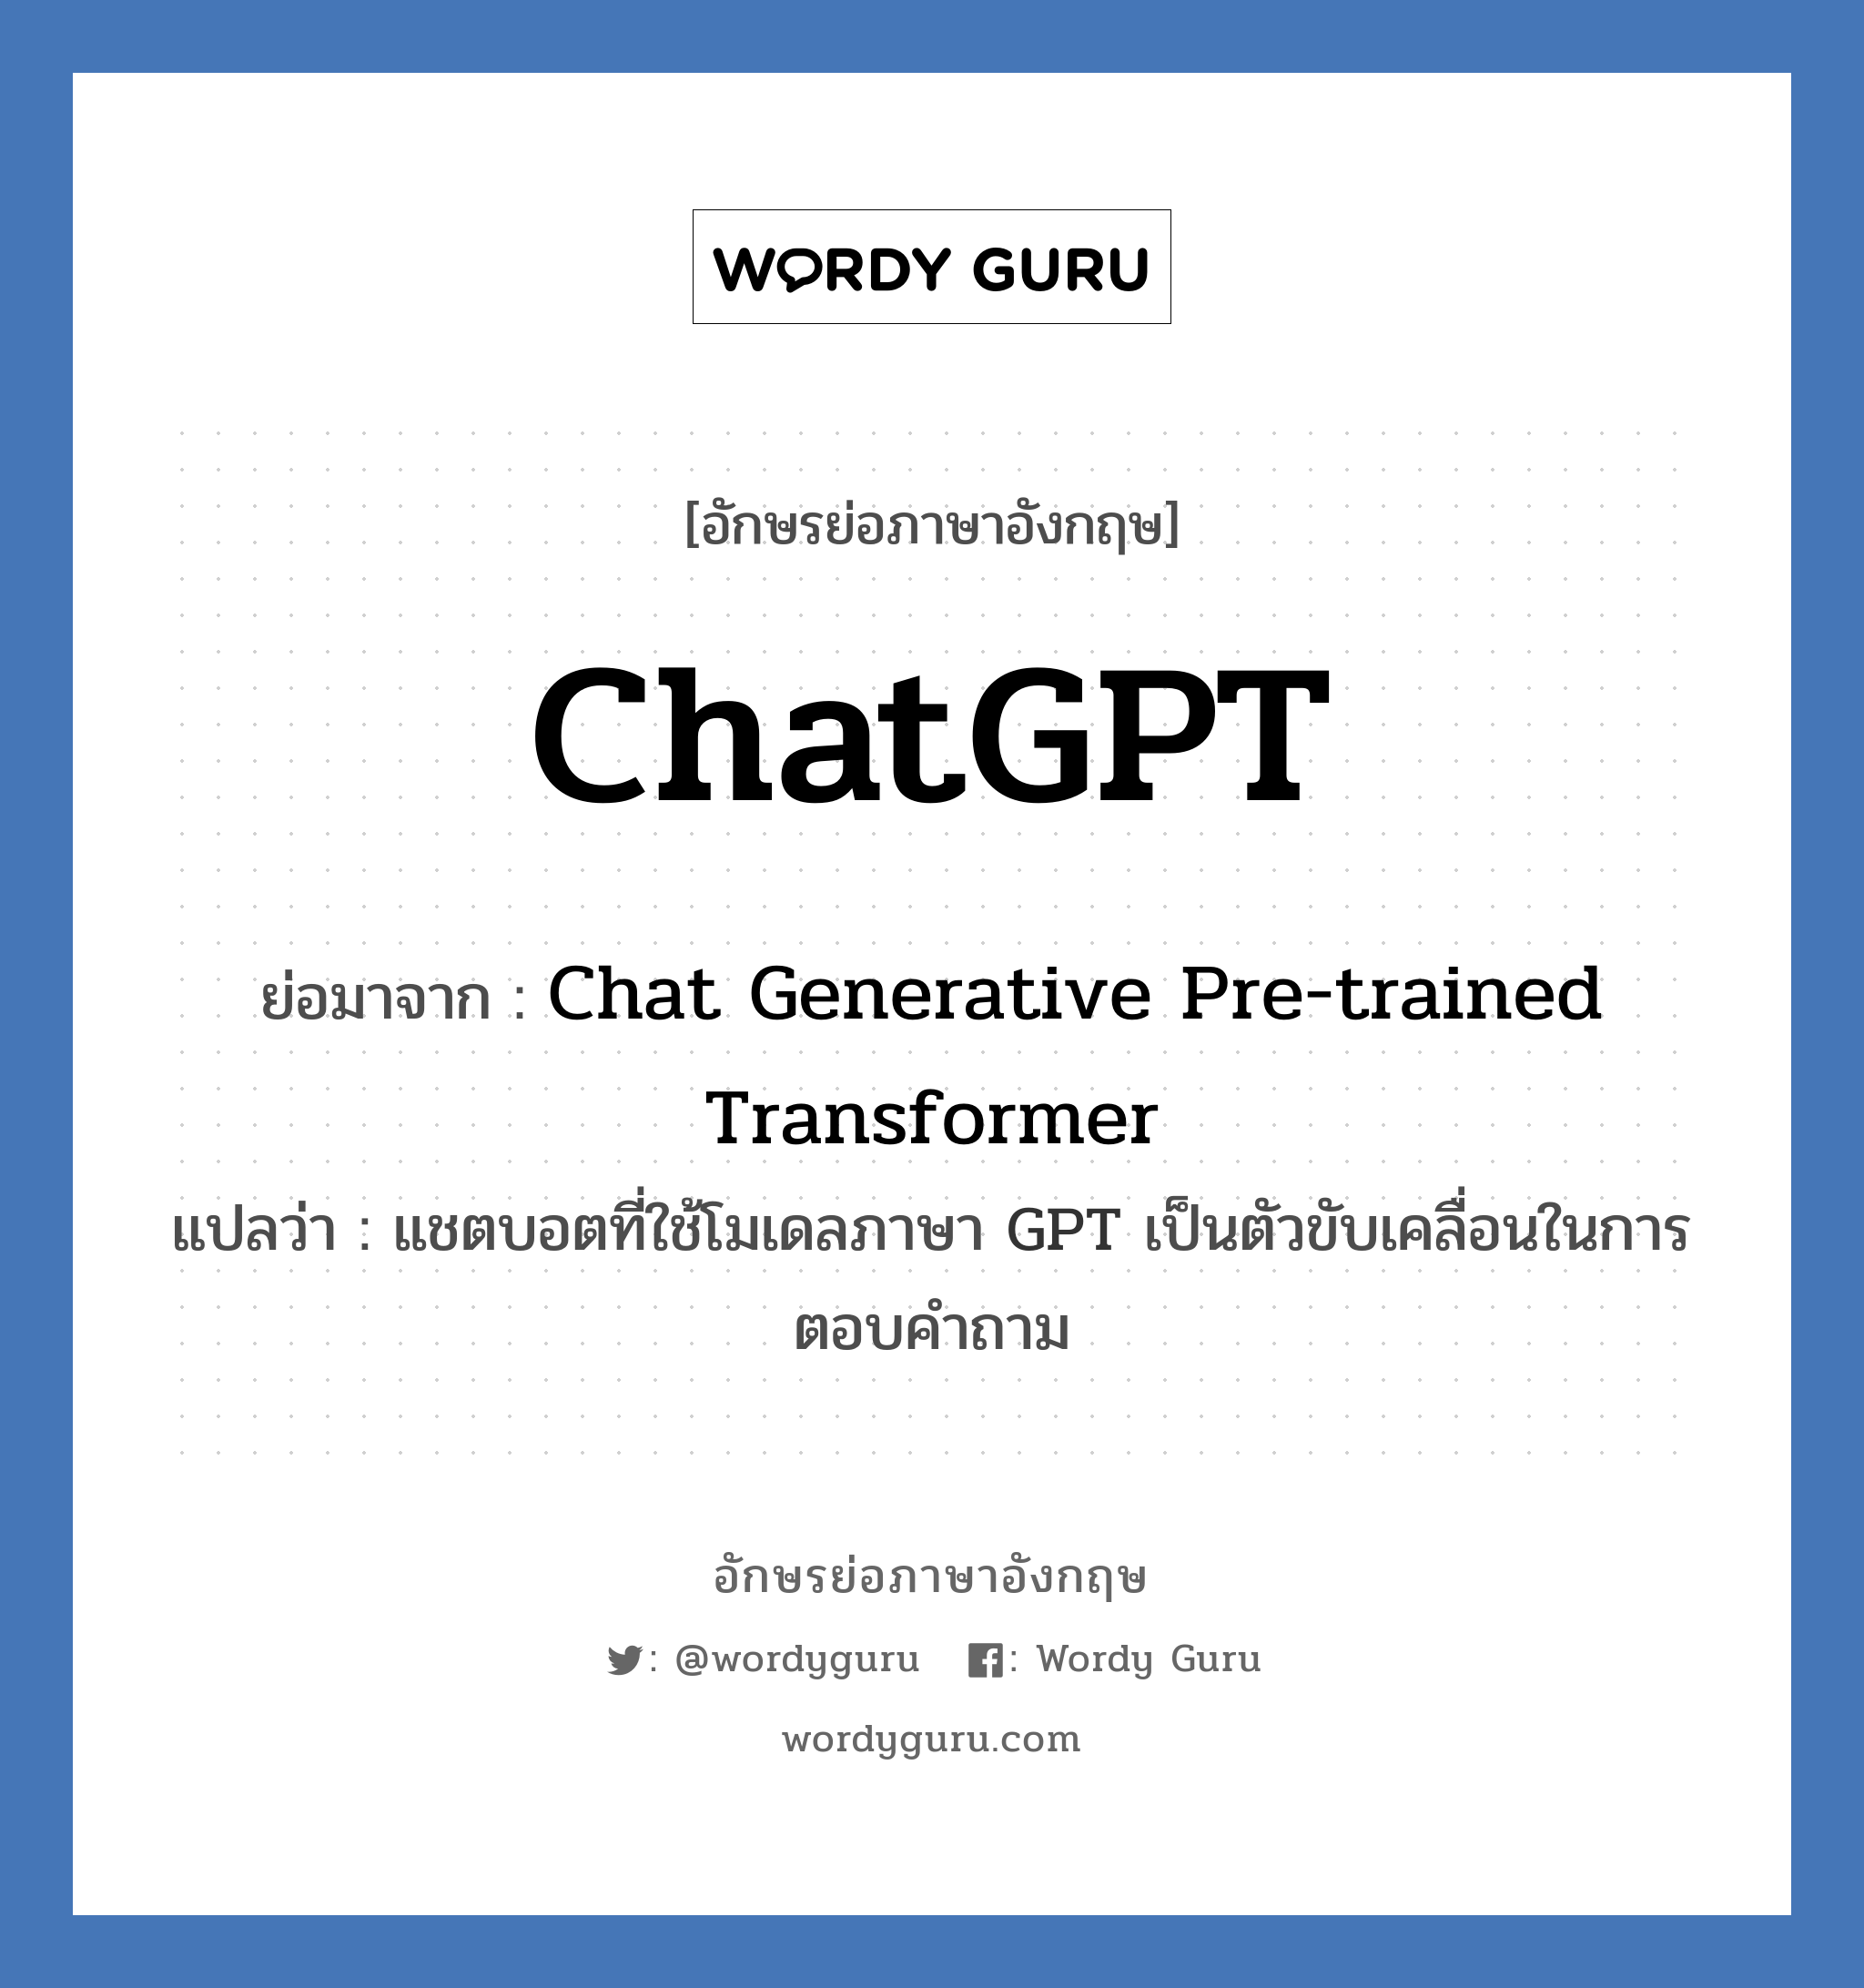 ChatGPT ย่อมาจาก? แปลว่า?, อักษรย่อภาษาอังกฤษ ChatGPT ย่อมาจาก Chat Generative Pre-trained Transformer แปลว่า แชตบอตที่ใช้โมเดลภาษา GPT เป็นตัวขับเคลื่อนในการตอบคำถาม หมวด IT